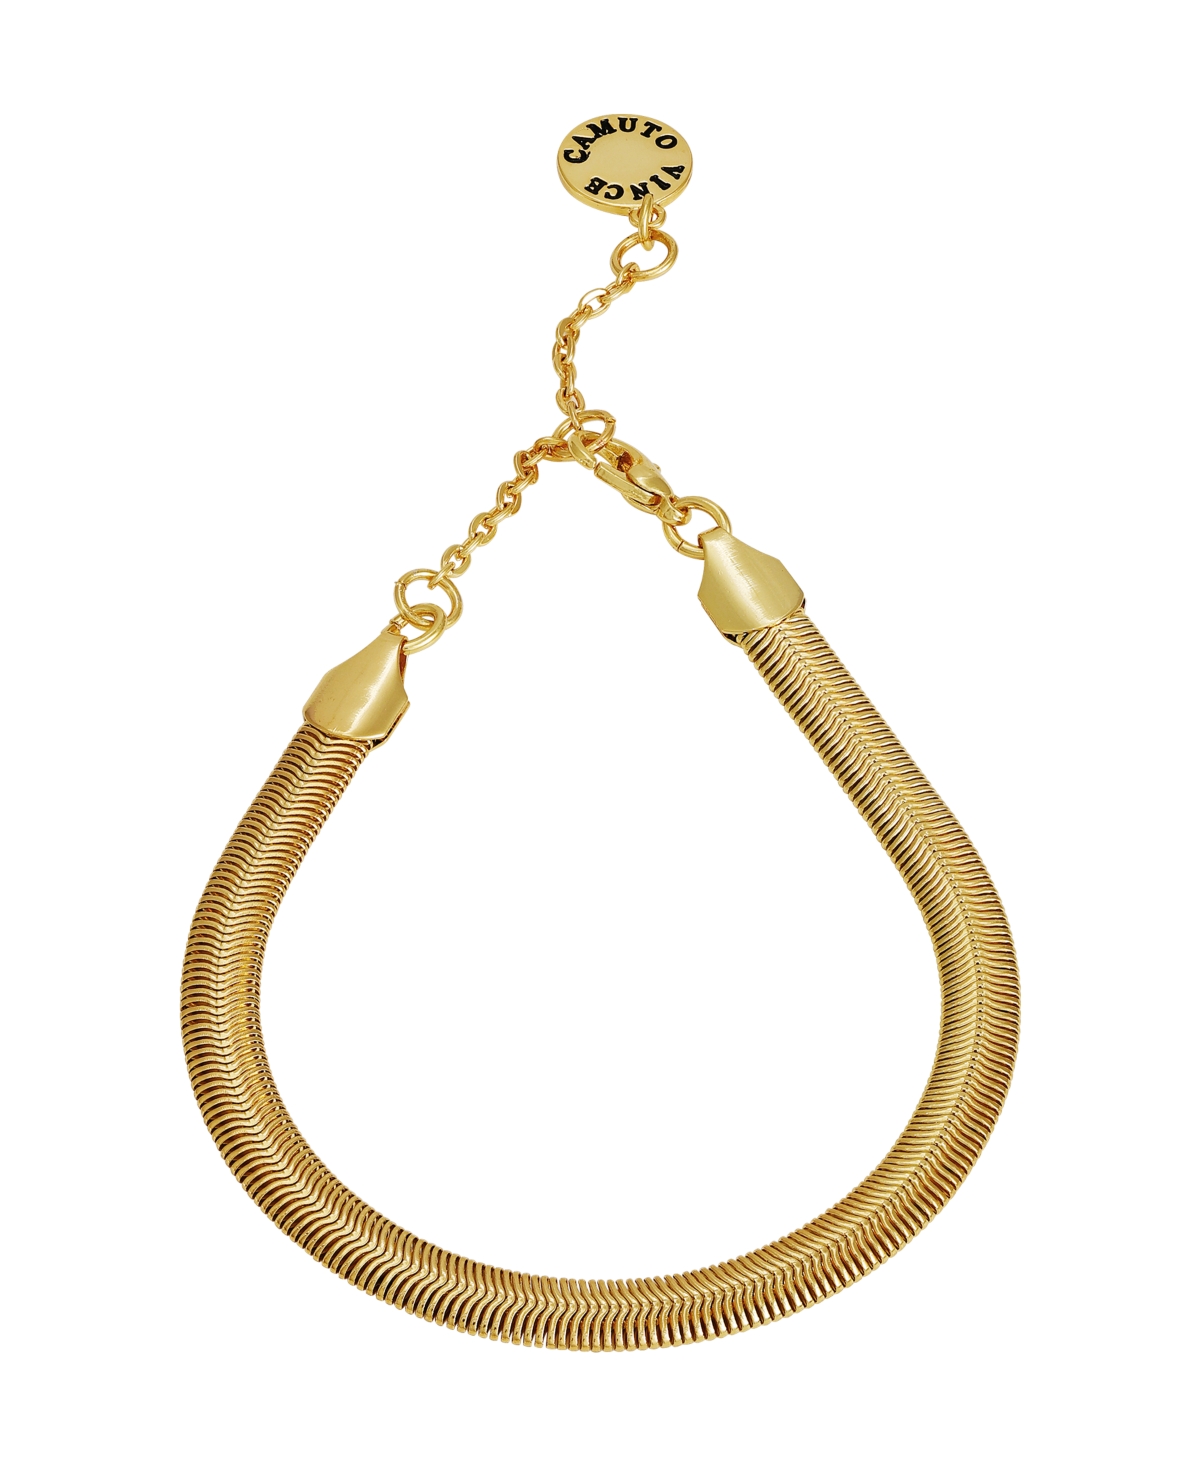 Vince Camuto Gold-tone Snake Chain Bracelet, 7.5" + 2" Extender